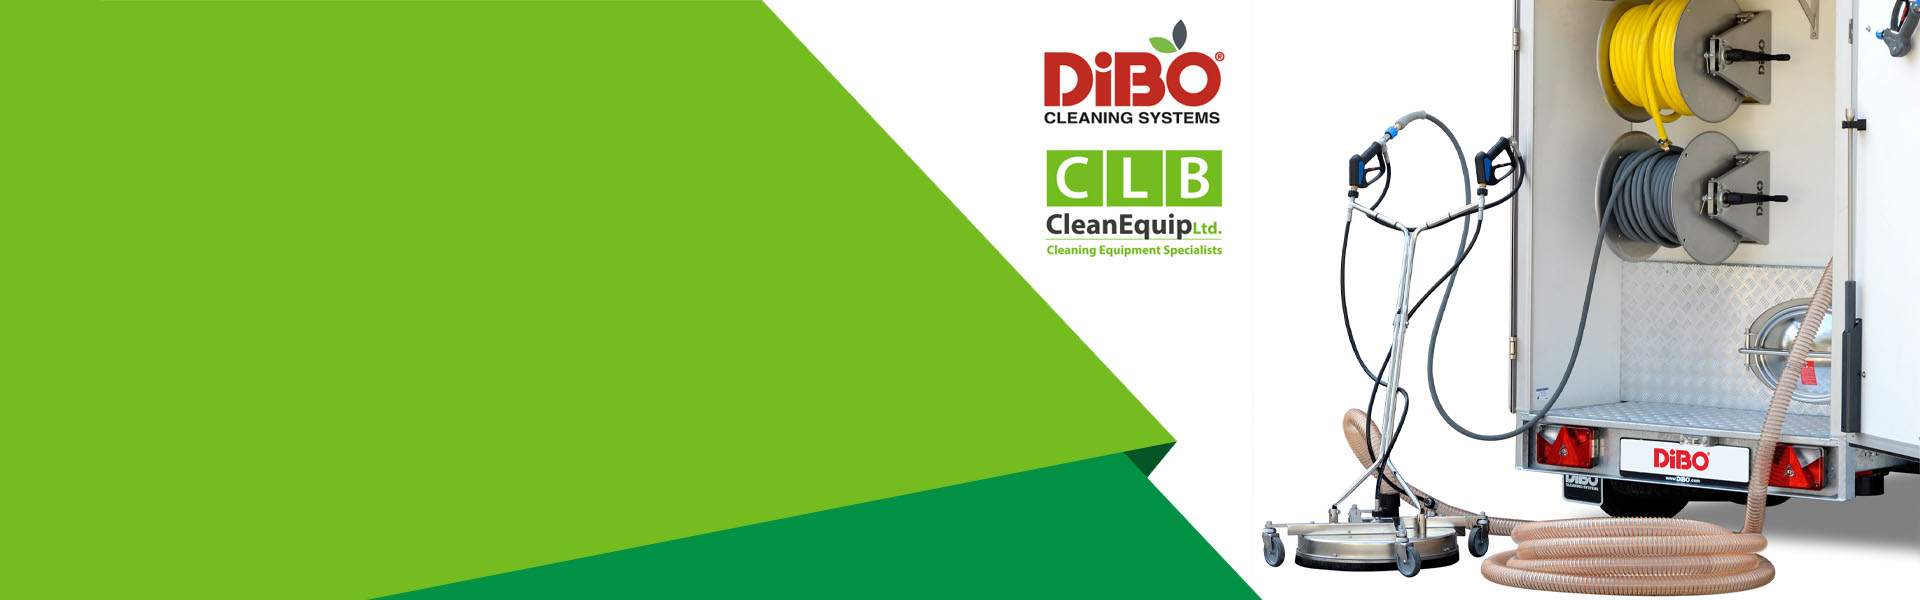 DiBO JMB-C+ WWC Heavy Cleaning Hot Water Pressure Washer Trailer